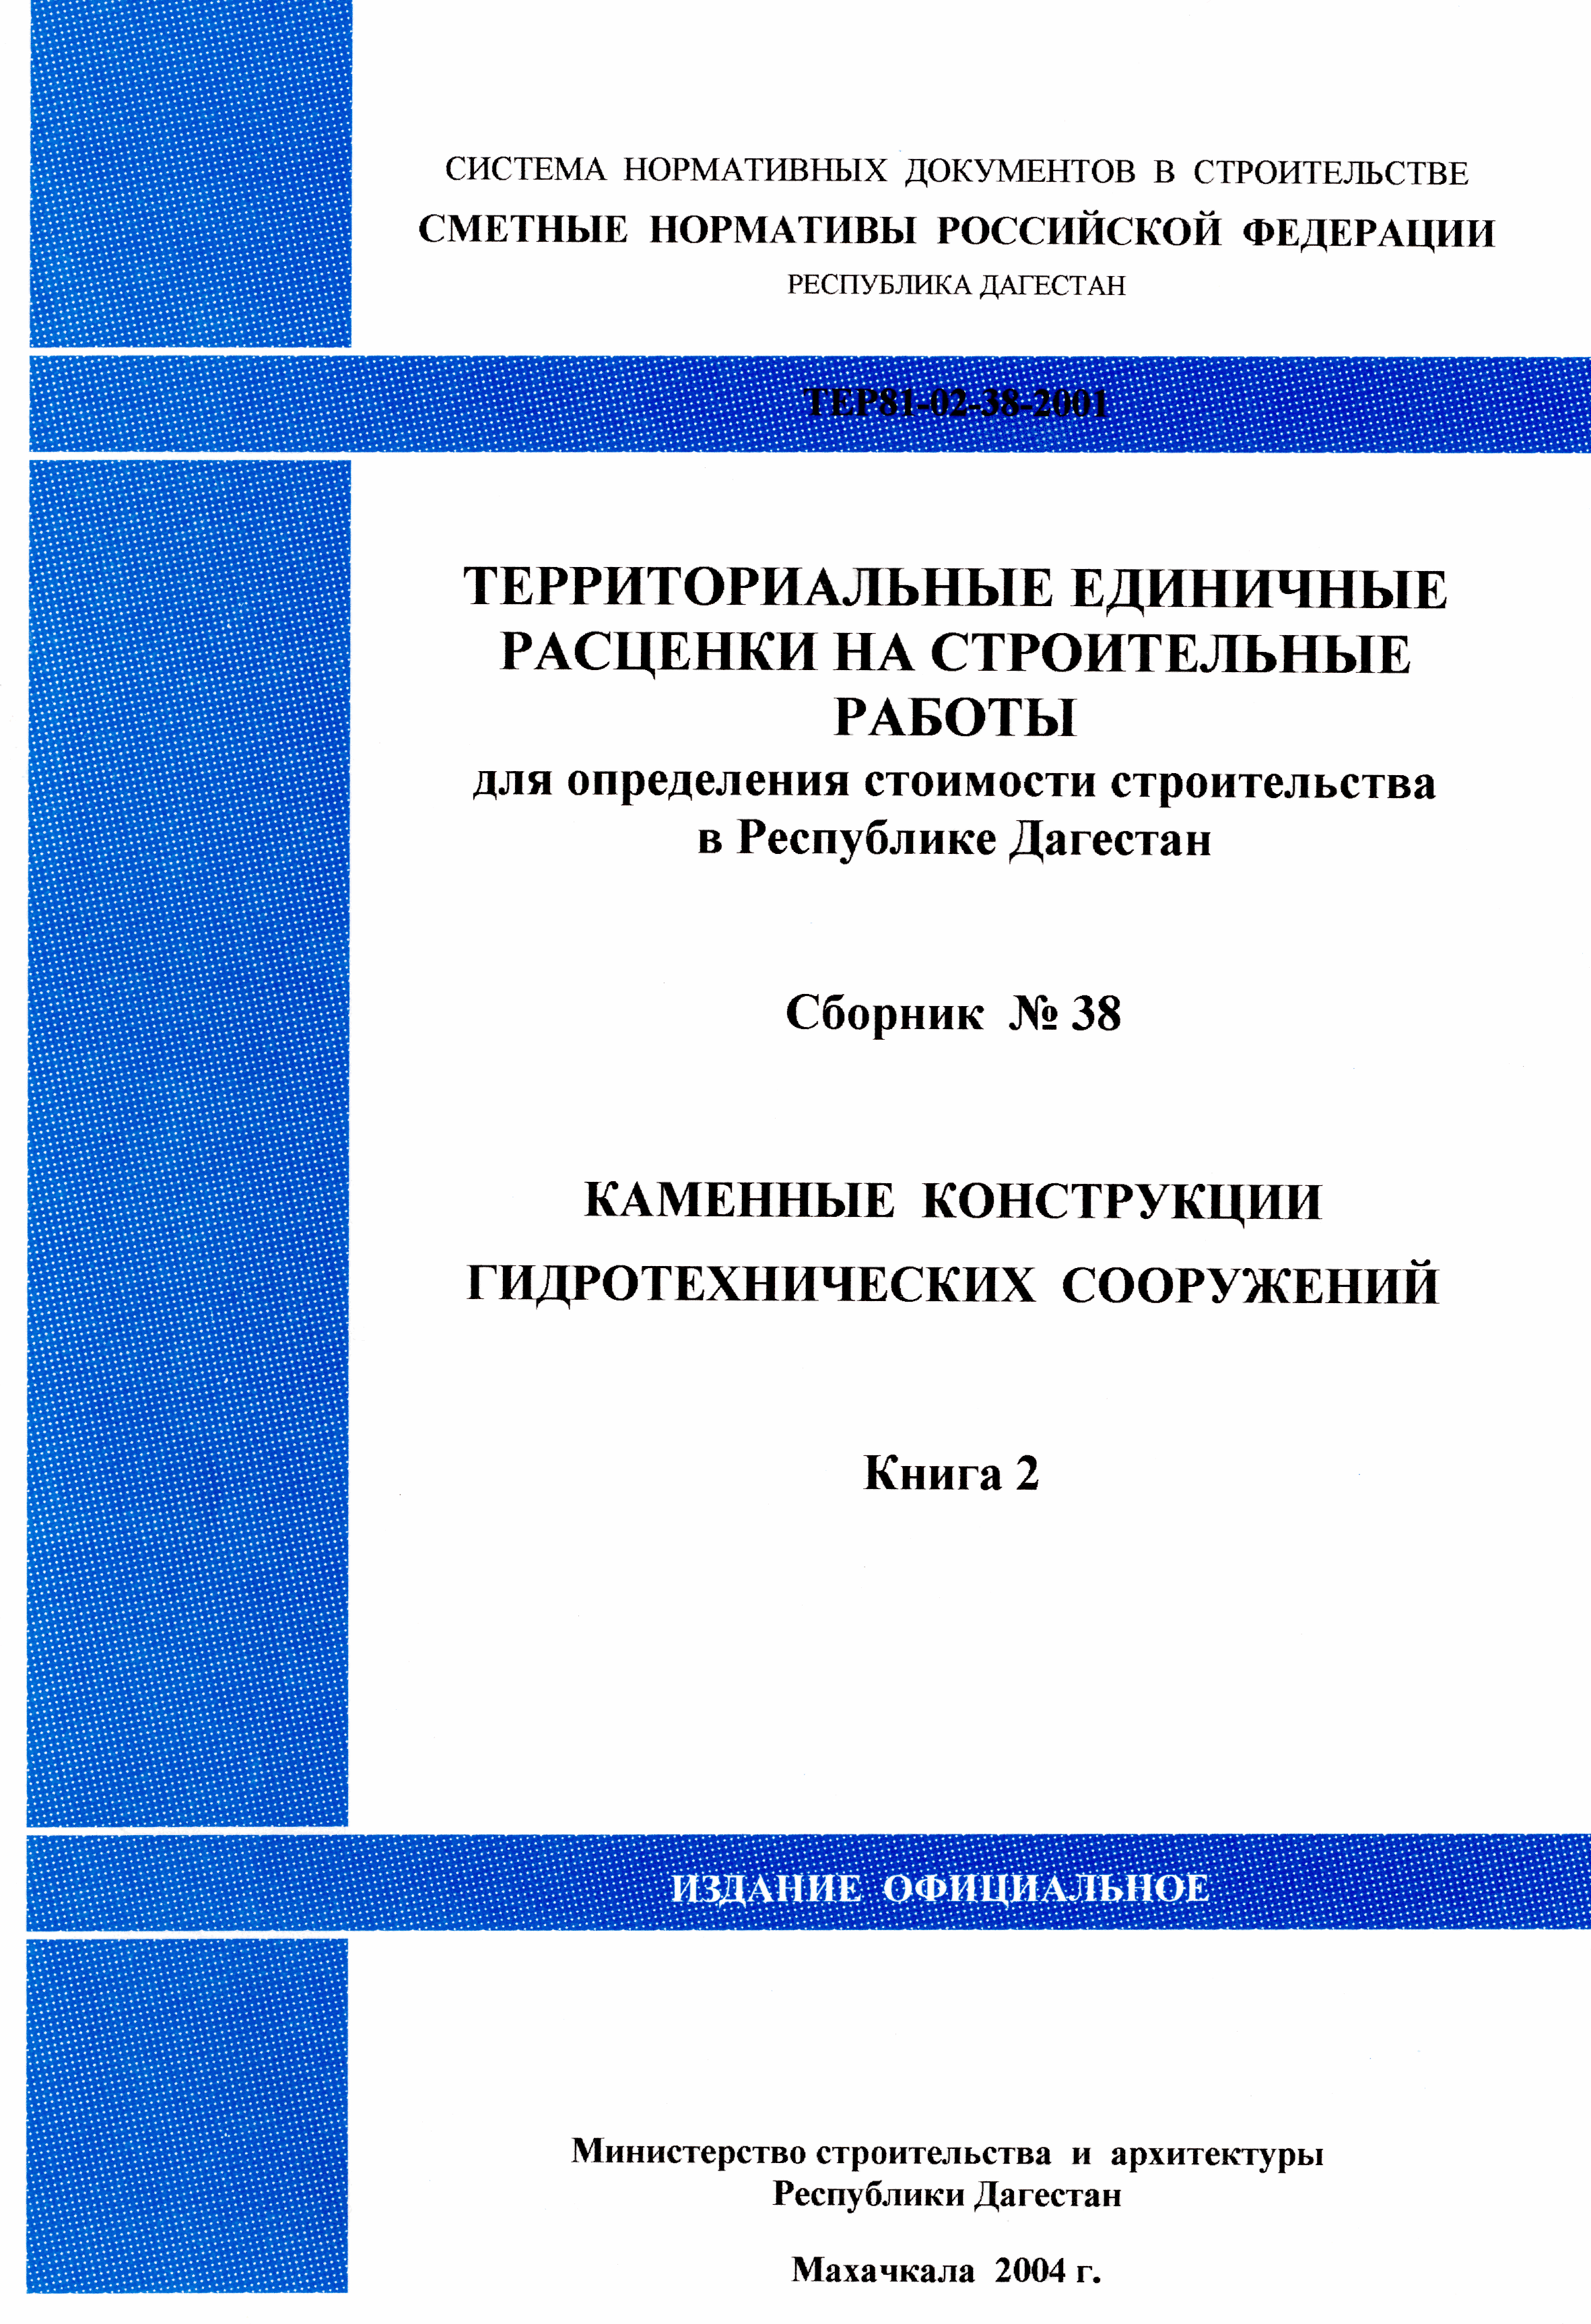 ТЕР Республика Дагестан 2001-38